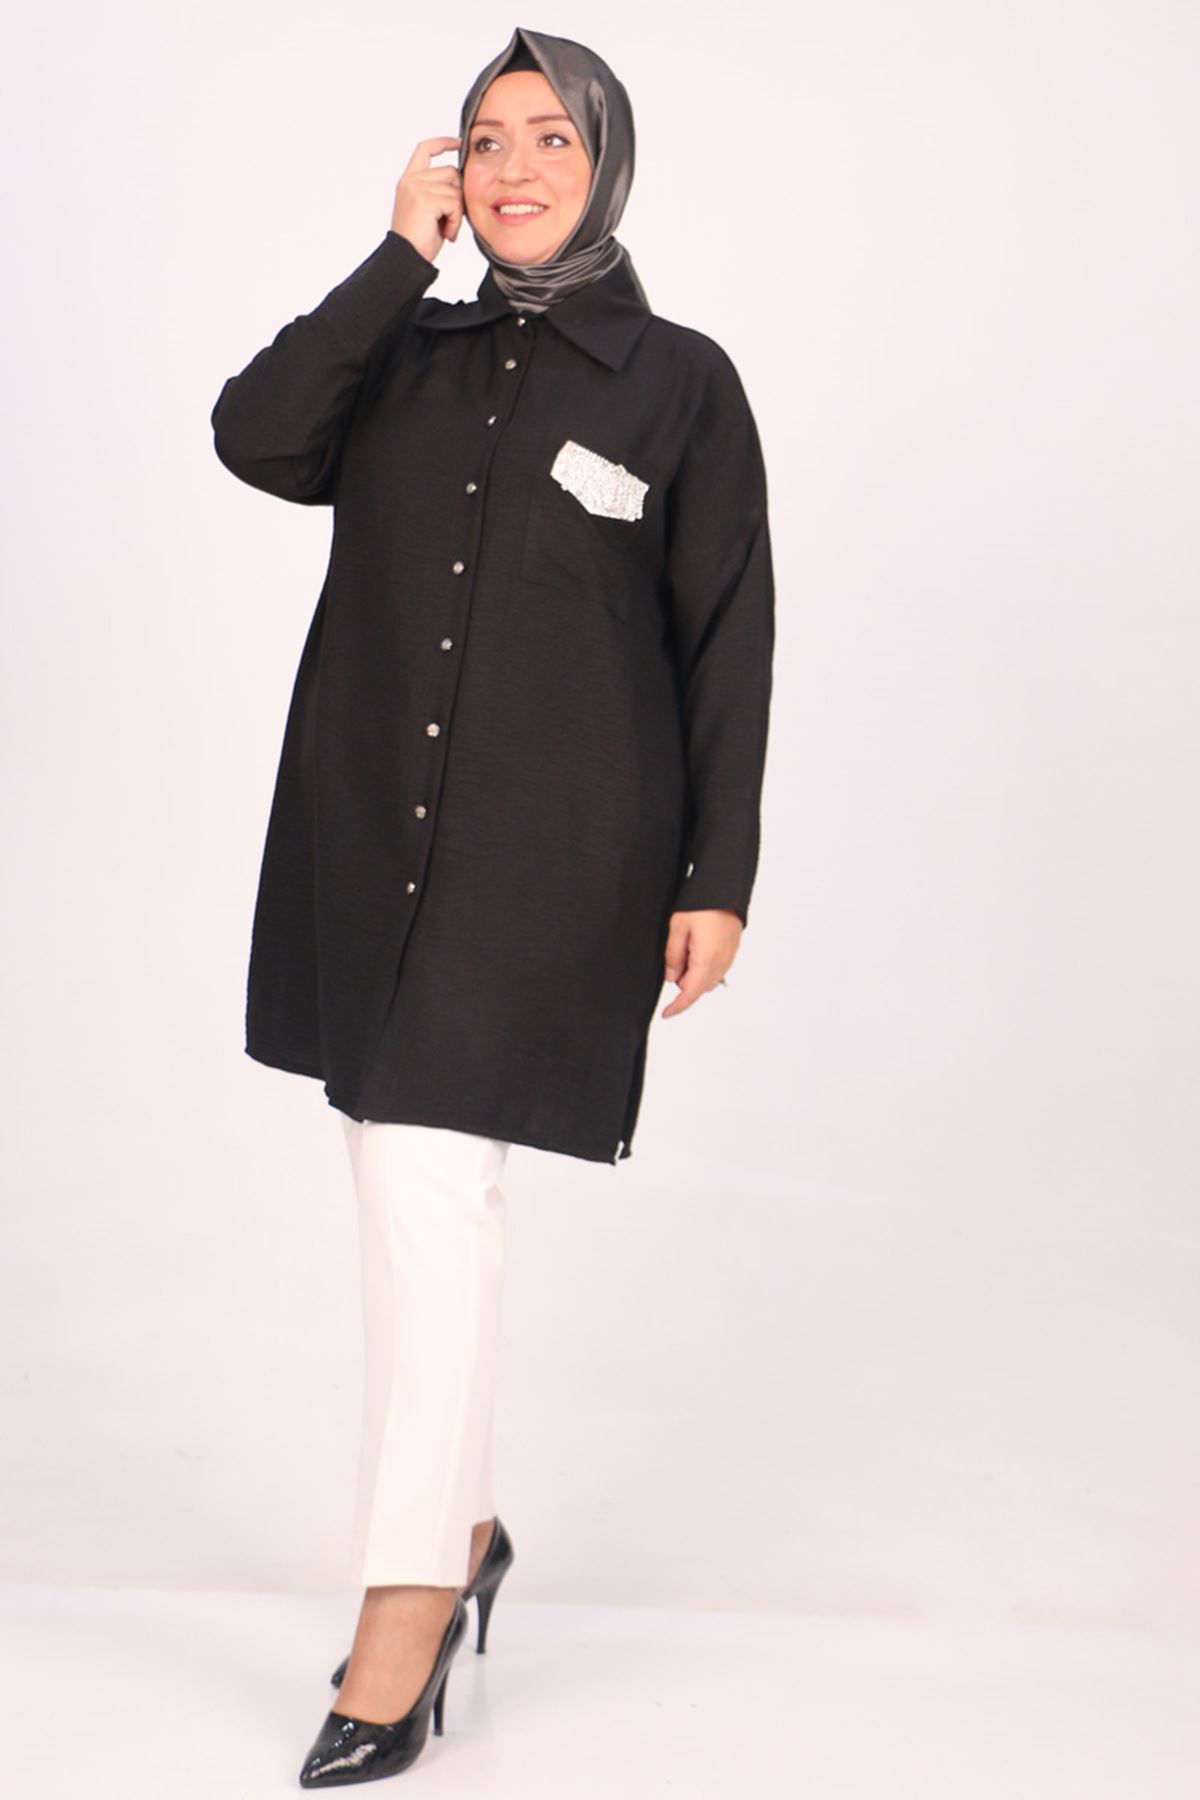 38112 Large Size Linen Airobin Shirt with Pocket Stone - Black